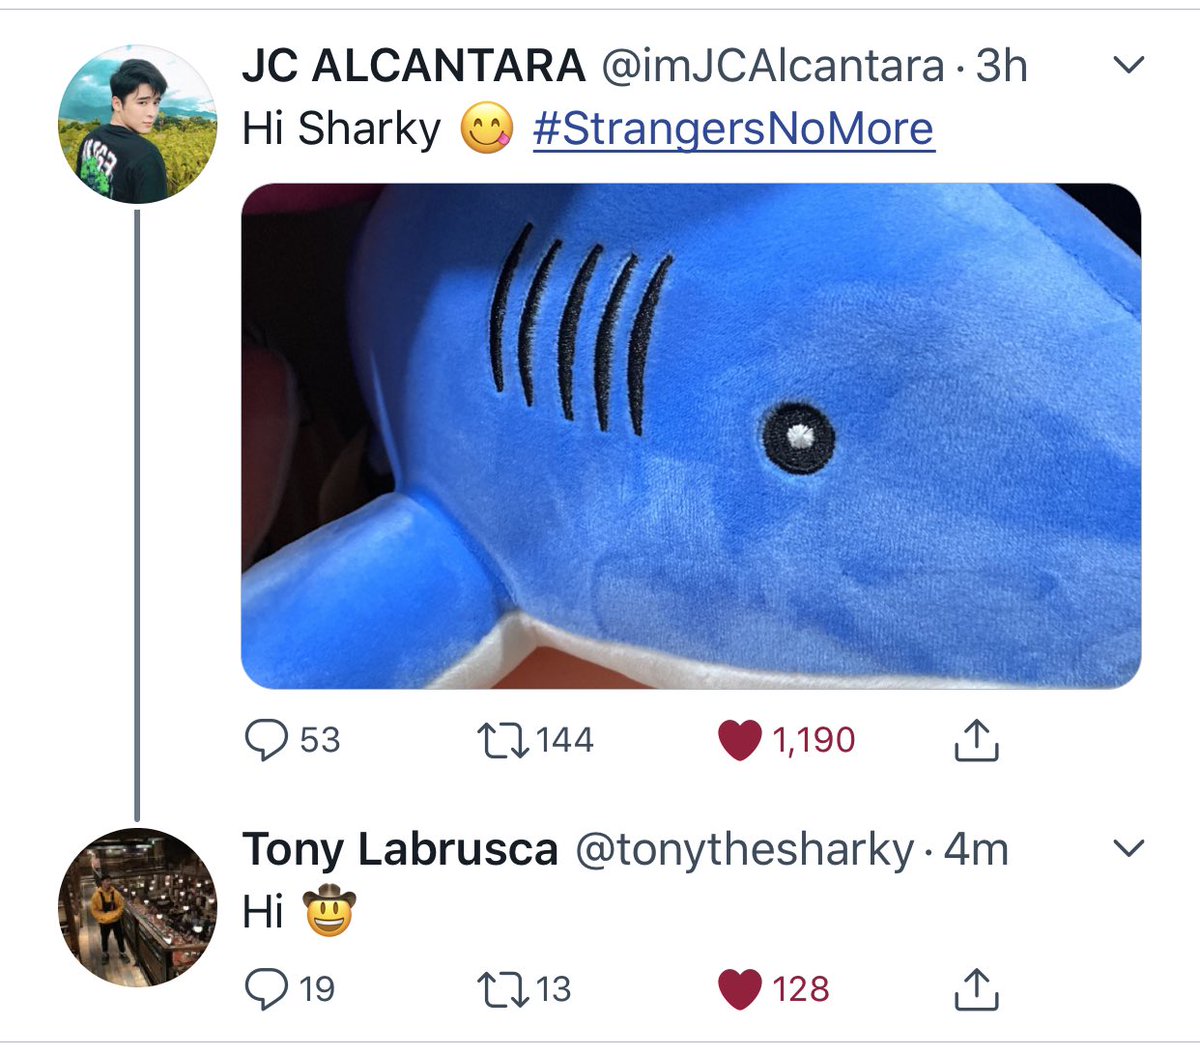 When JC remembers Tony on random sharky things. 